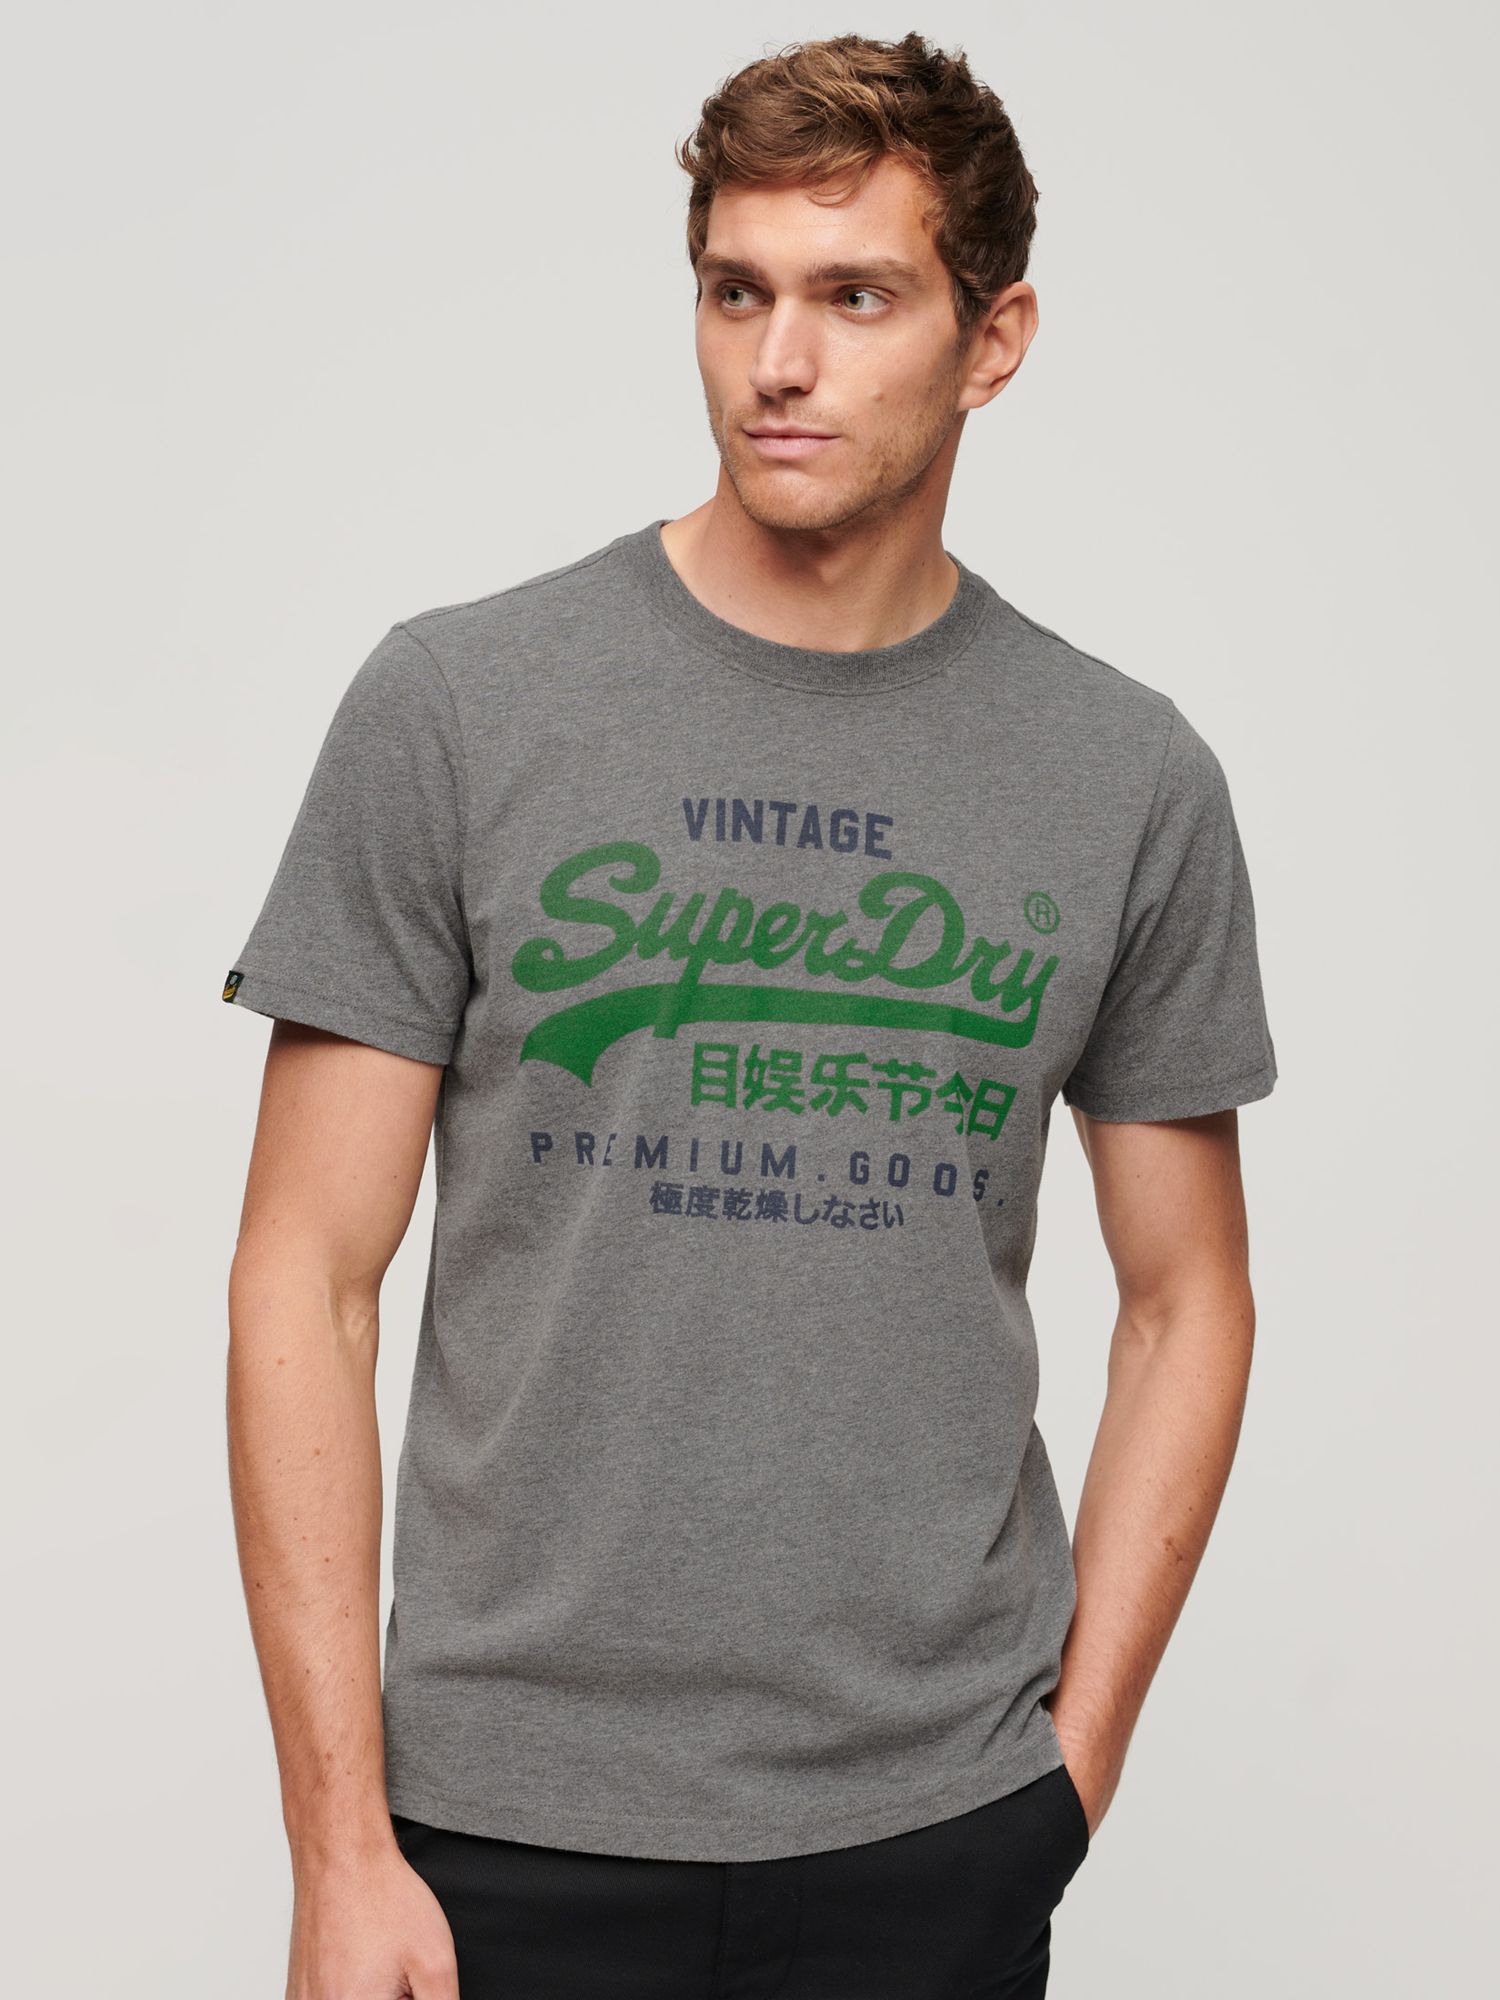 Футболка Superdry Vintage Logo Premium Goods, темно-серый меланжевый